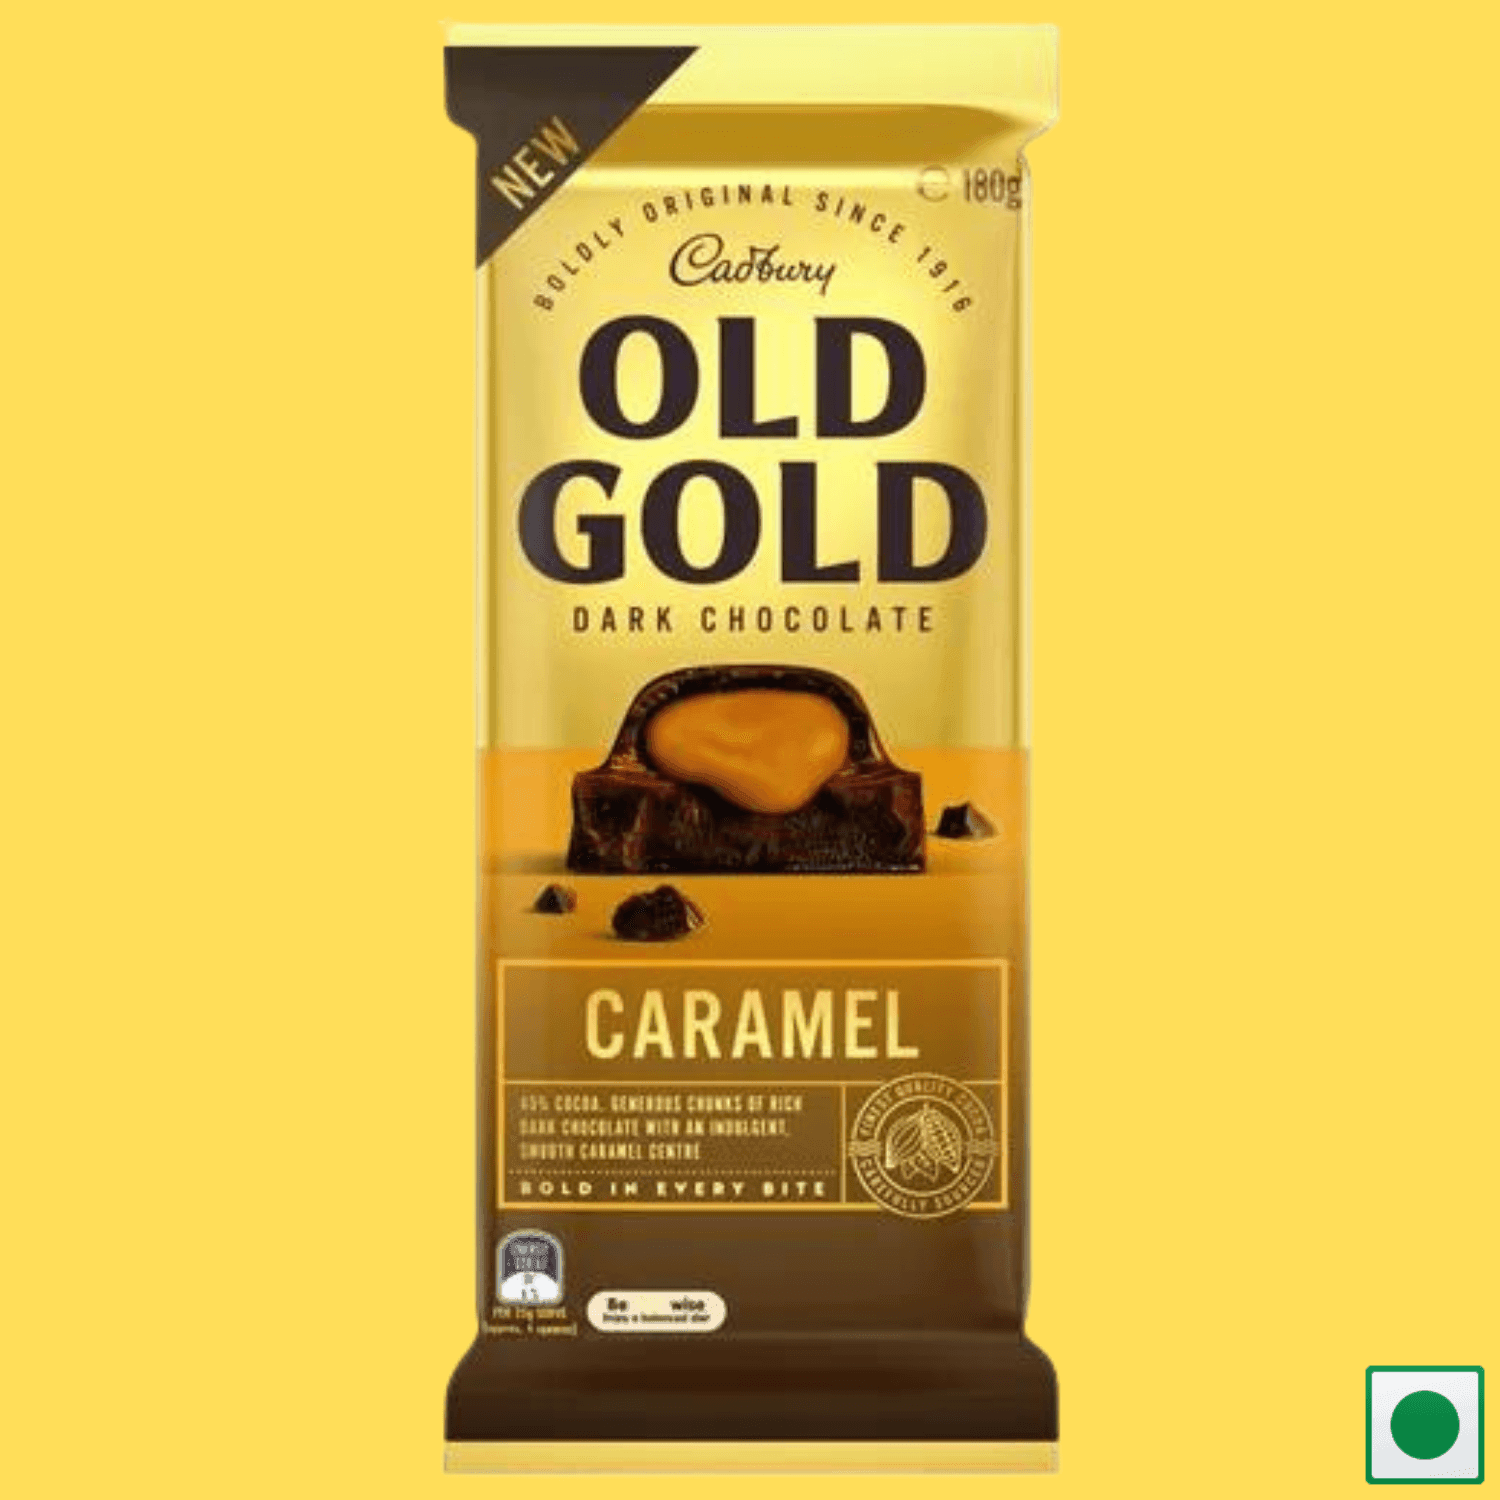 Cadbury Old Gold Dark Chocolate Caramel, 180g (Australian Imported) - Super 7 Mart